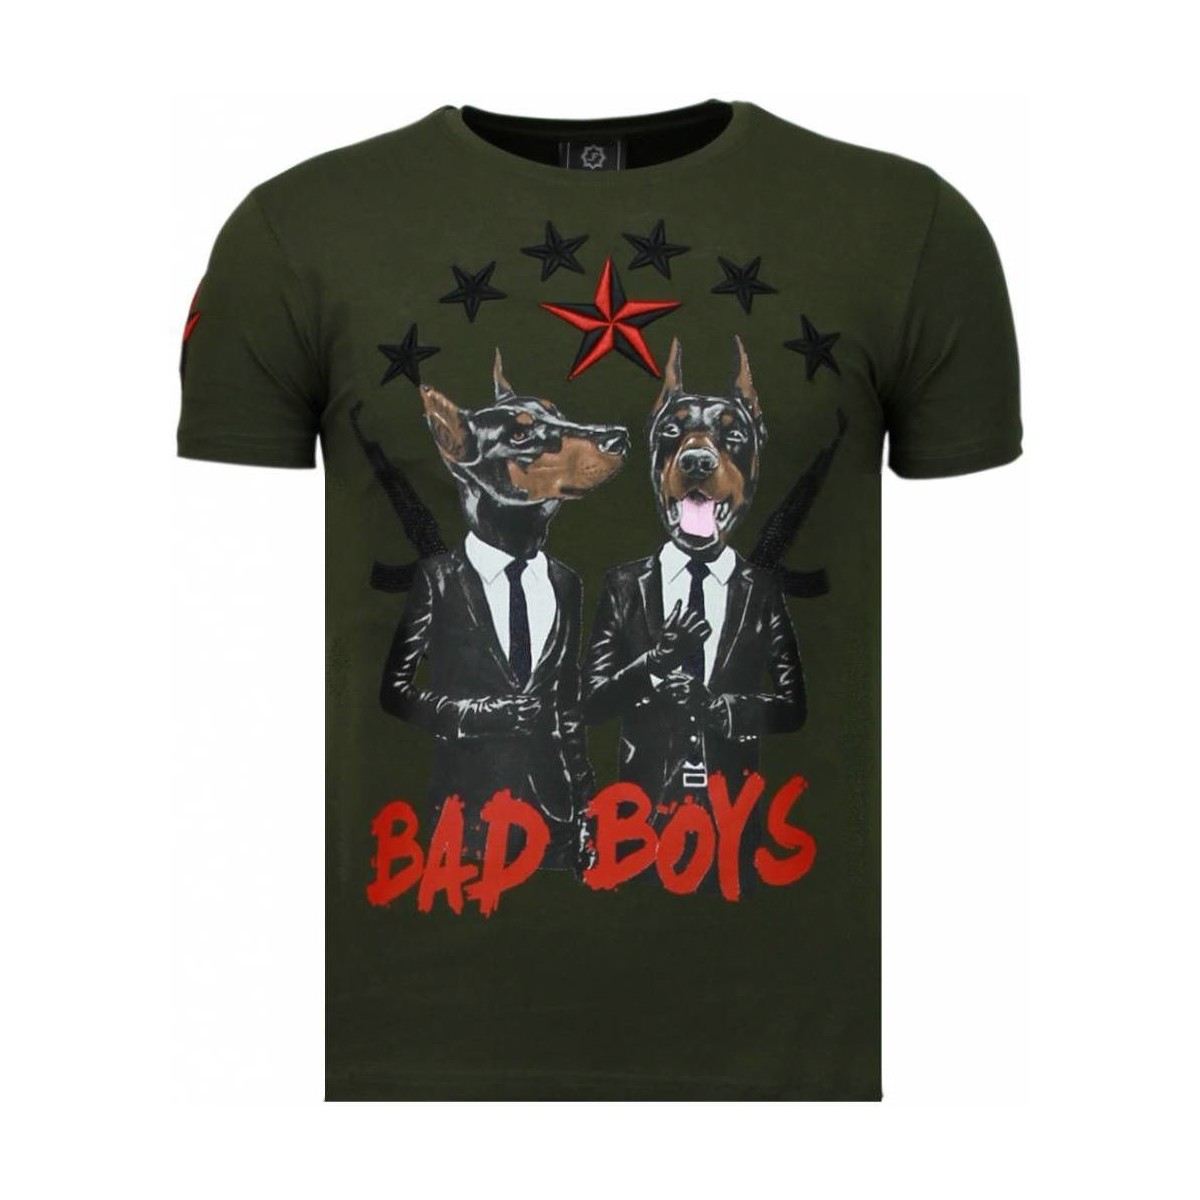 textil Herr T-shirts Local Fanatic Bad Boys Pinscher Rhinestone Grön